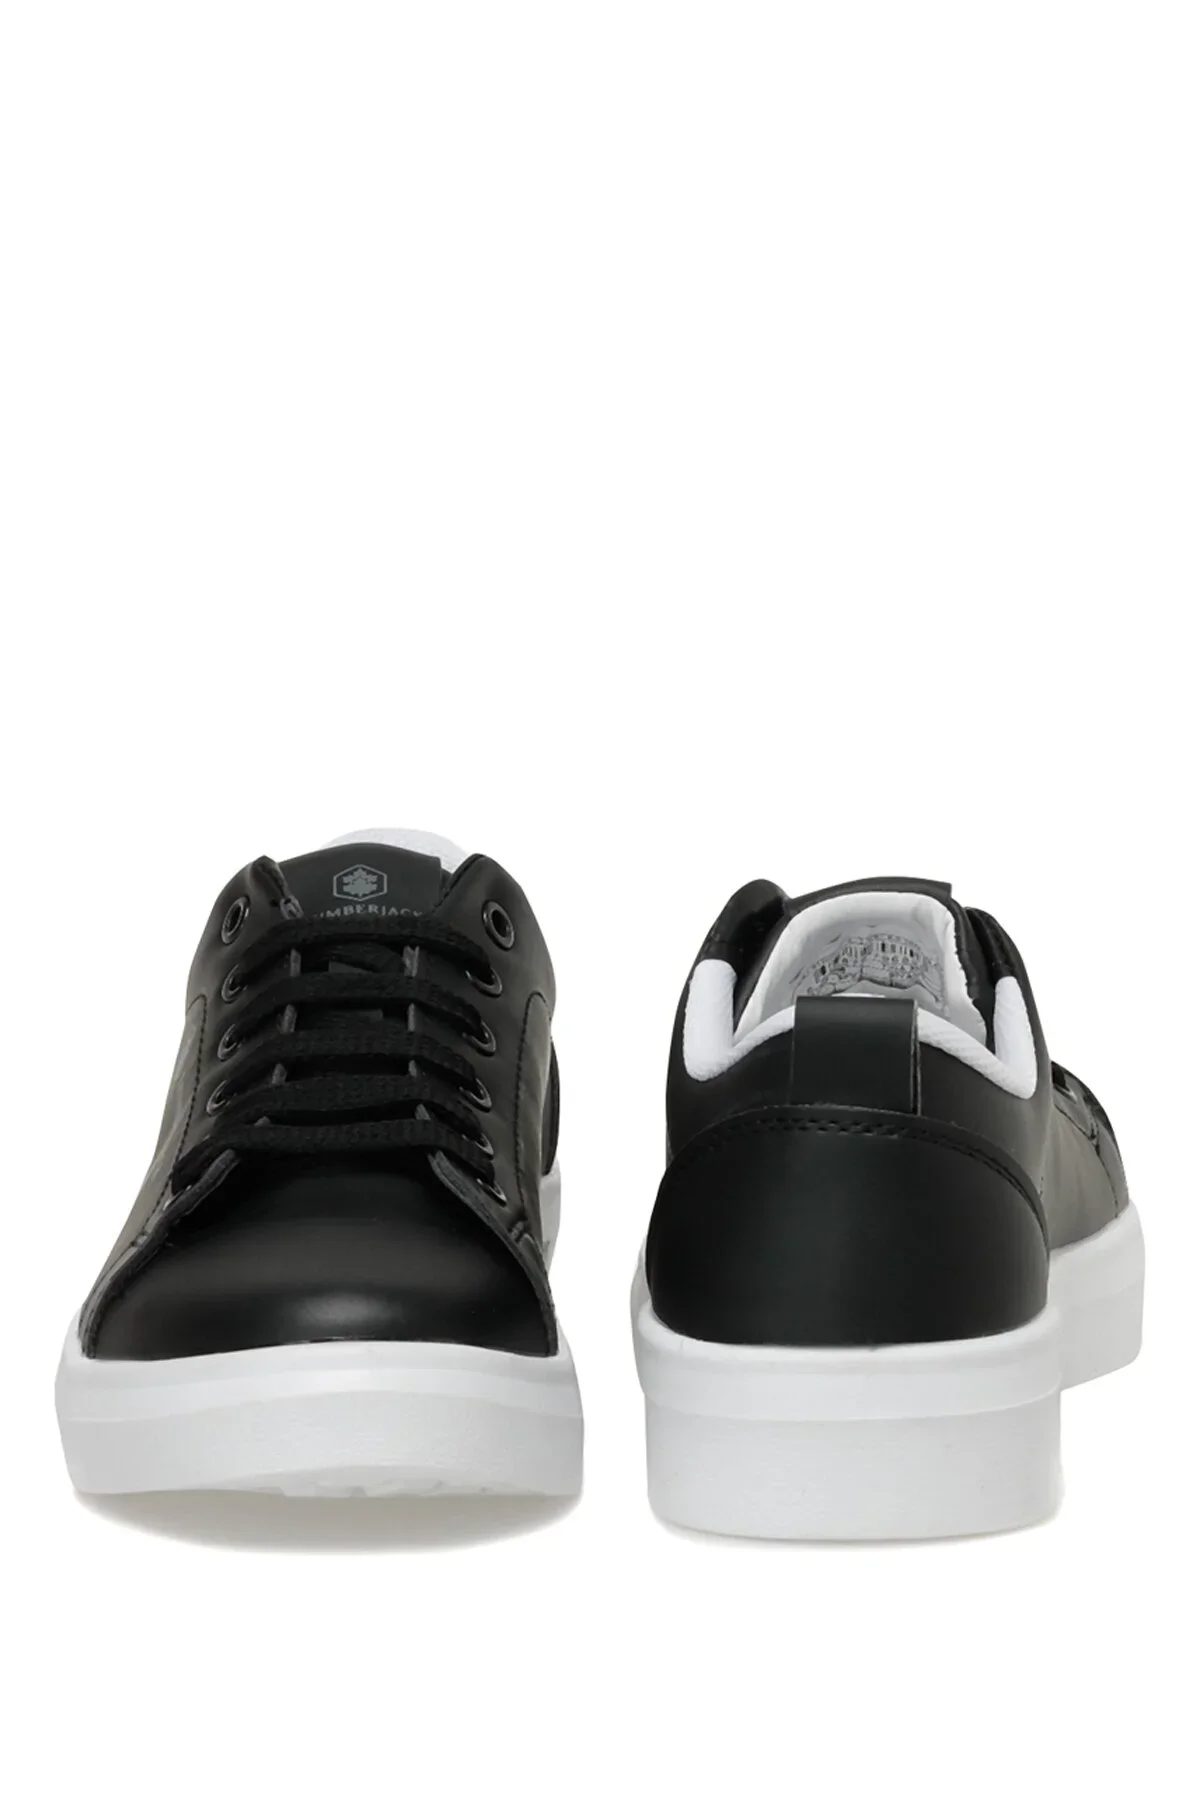 TINA 3FX Kadın Sneaker Spor Ayakkabı-Siyah - 5